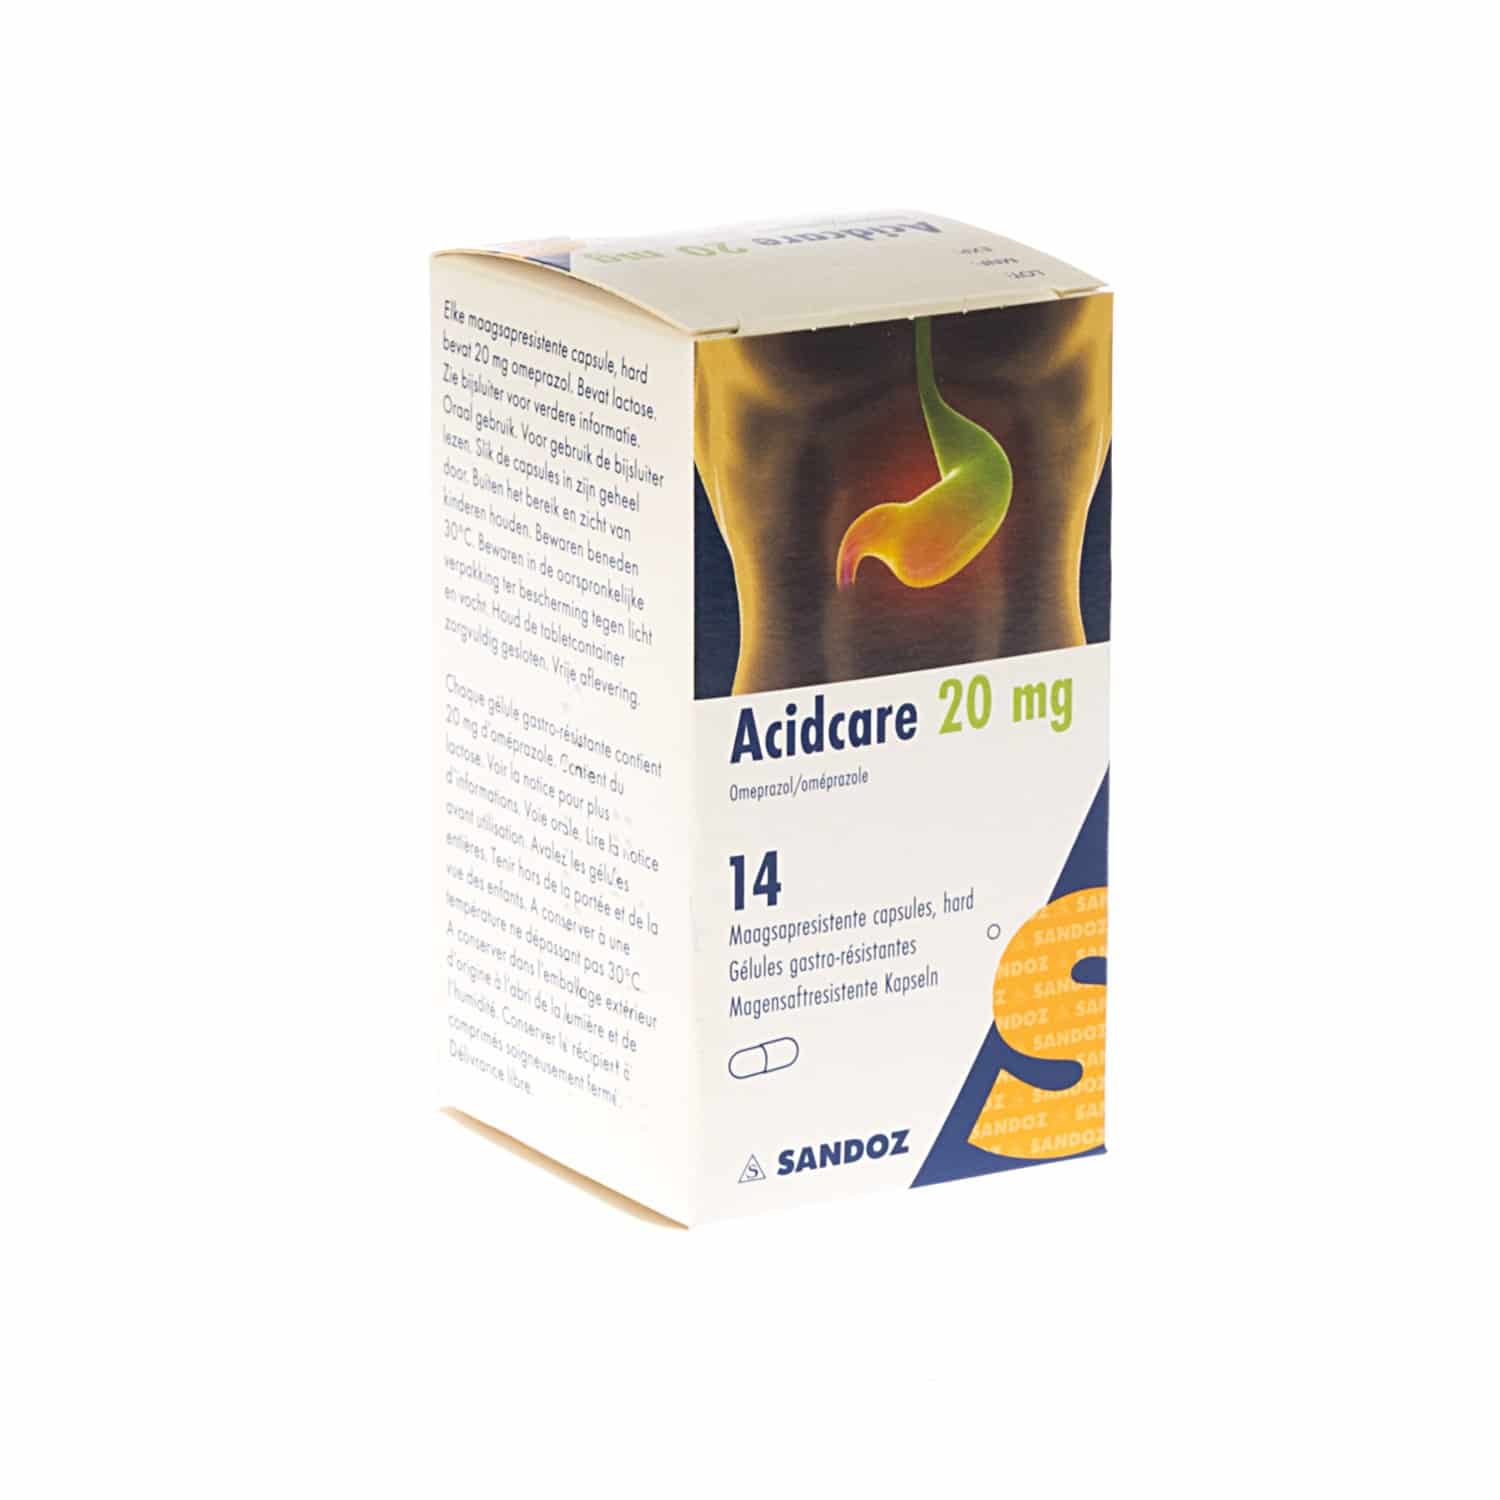 Acidcare 20 mg